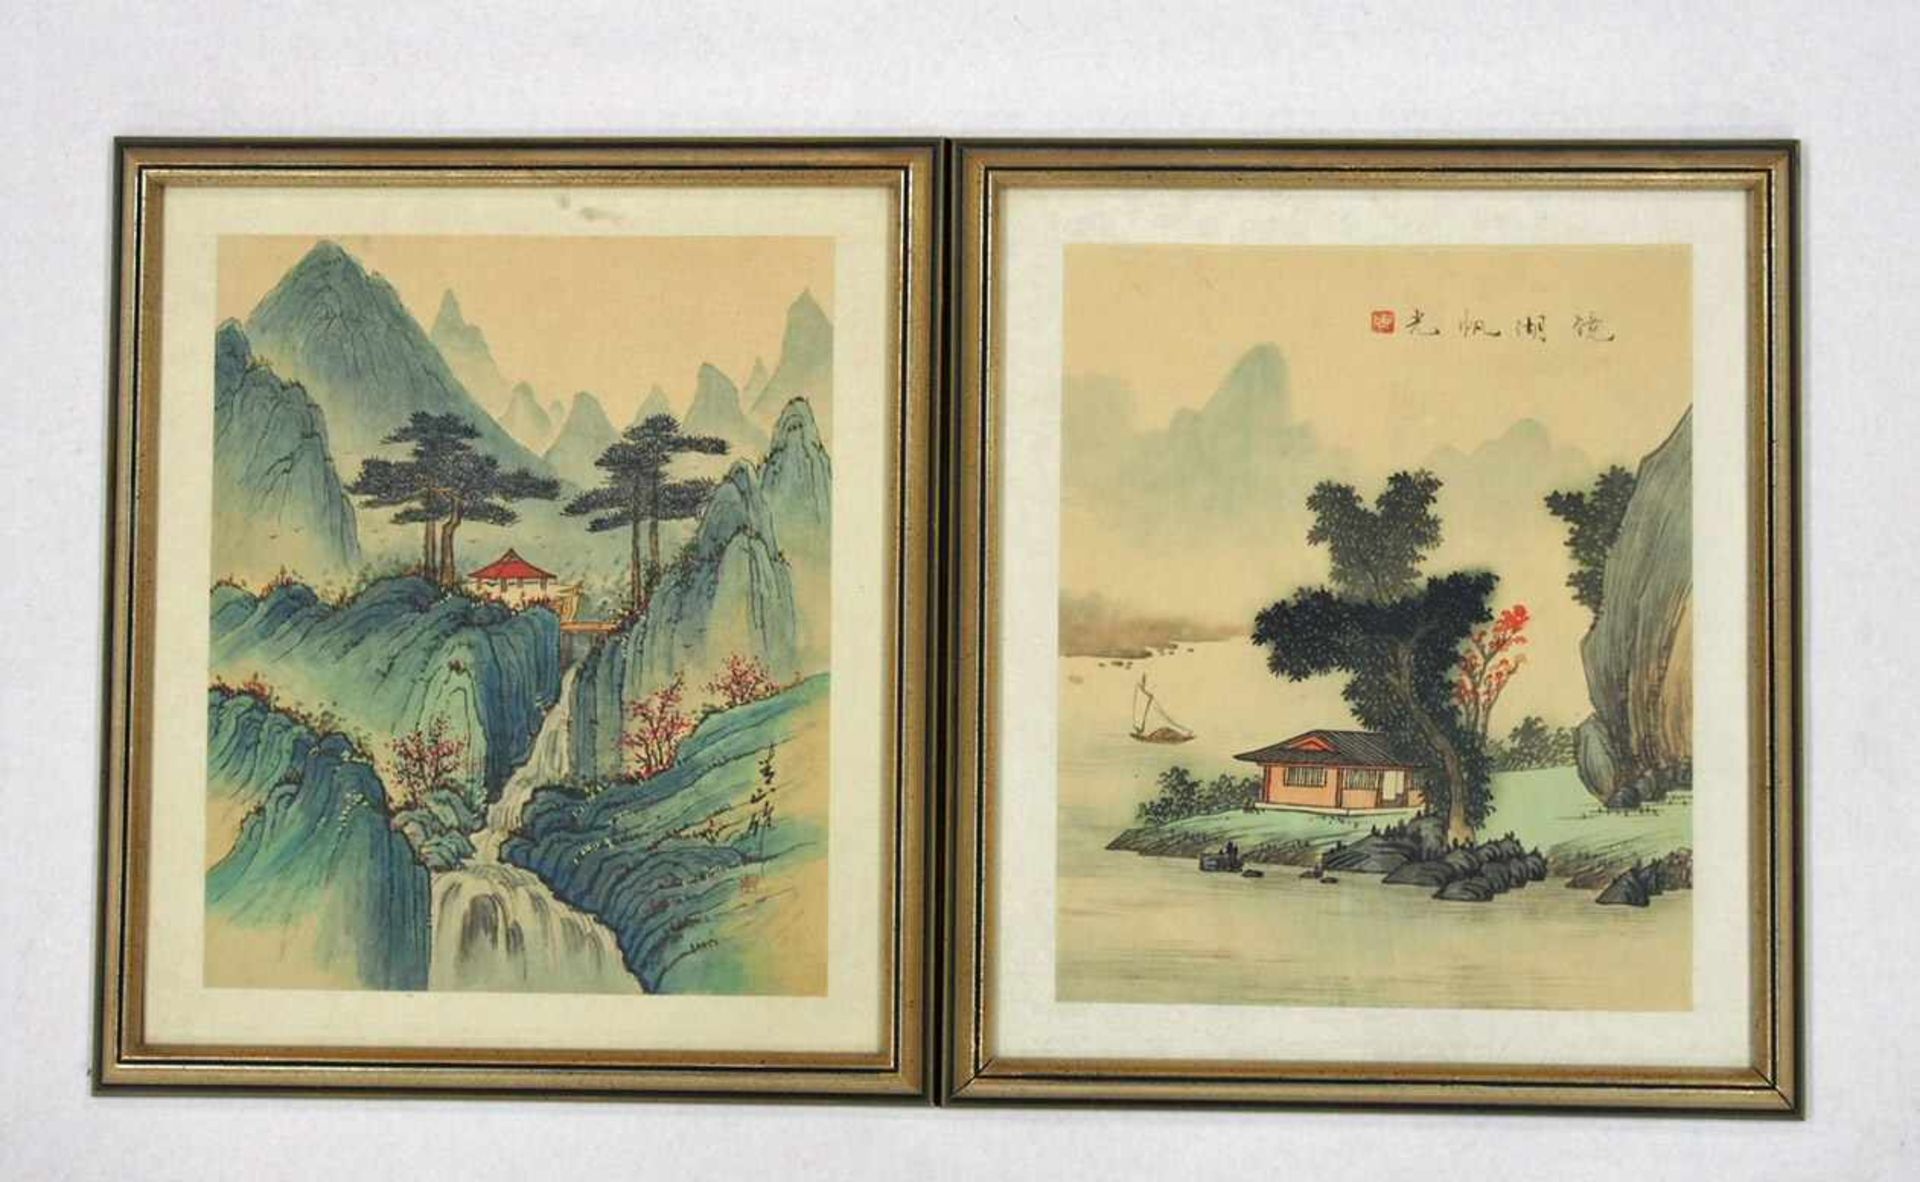 LandschaftsbilderSeide, bemalt, China, 20. Jahrhundert, signiert, verso Stempel, 27 x 22 cm, gerahmt